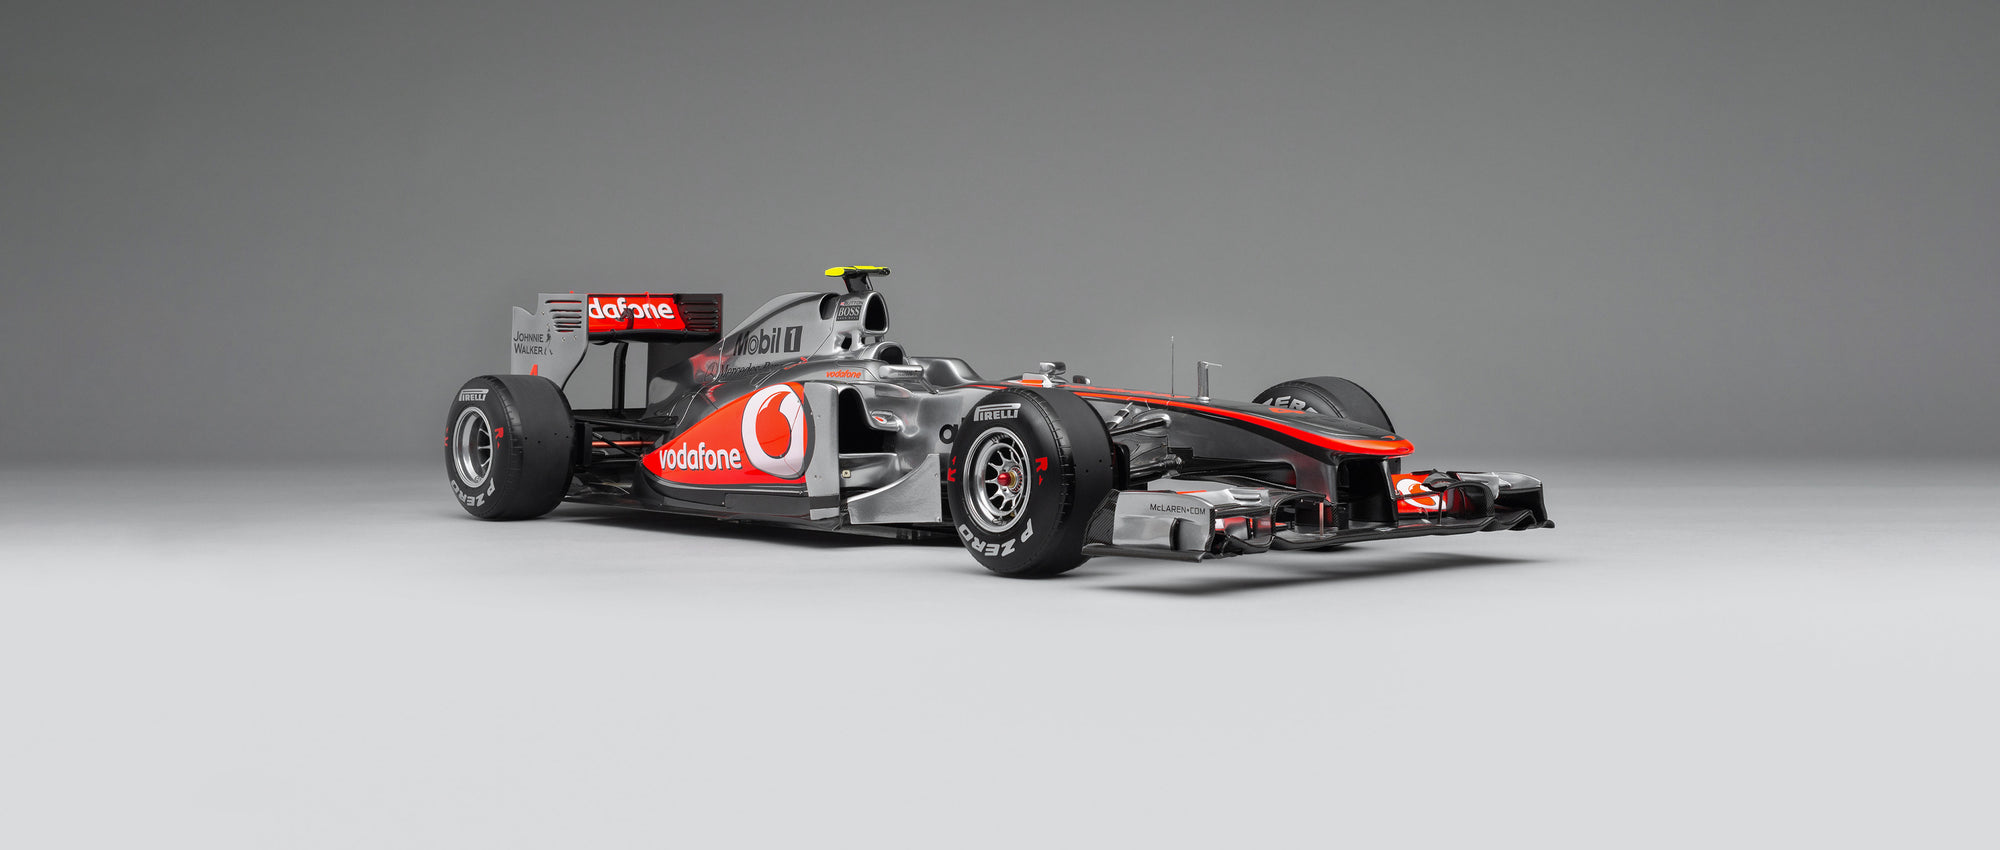 McLaren MP4-26 (2011) Chinese GP - Button